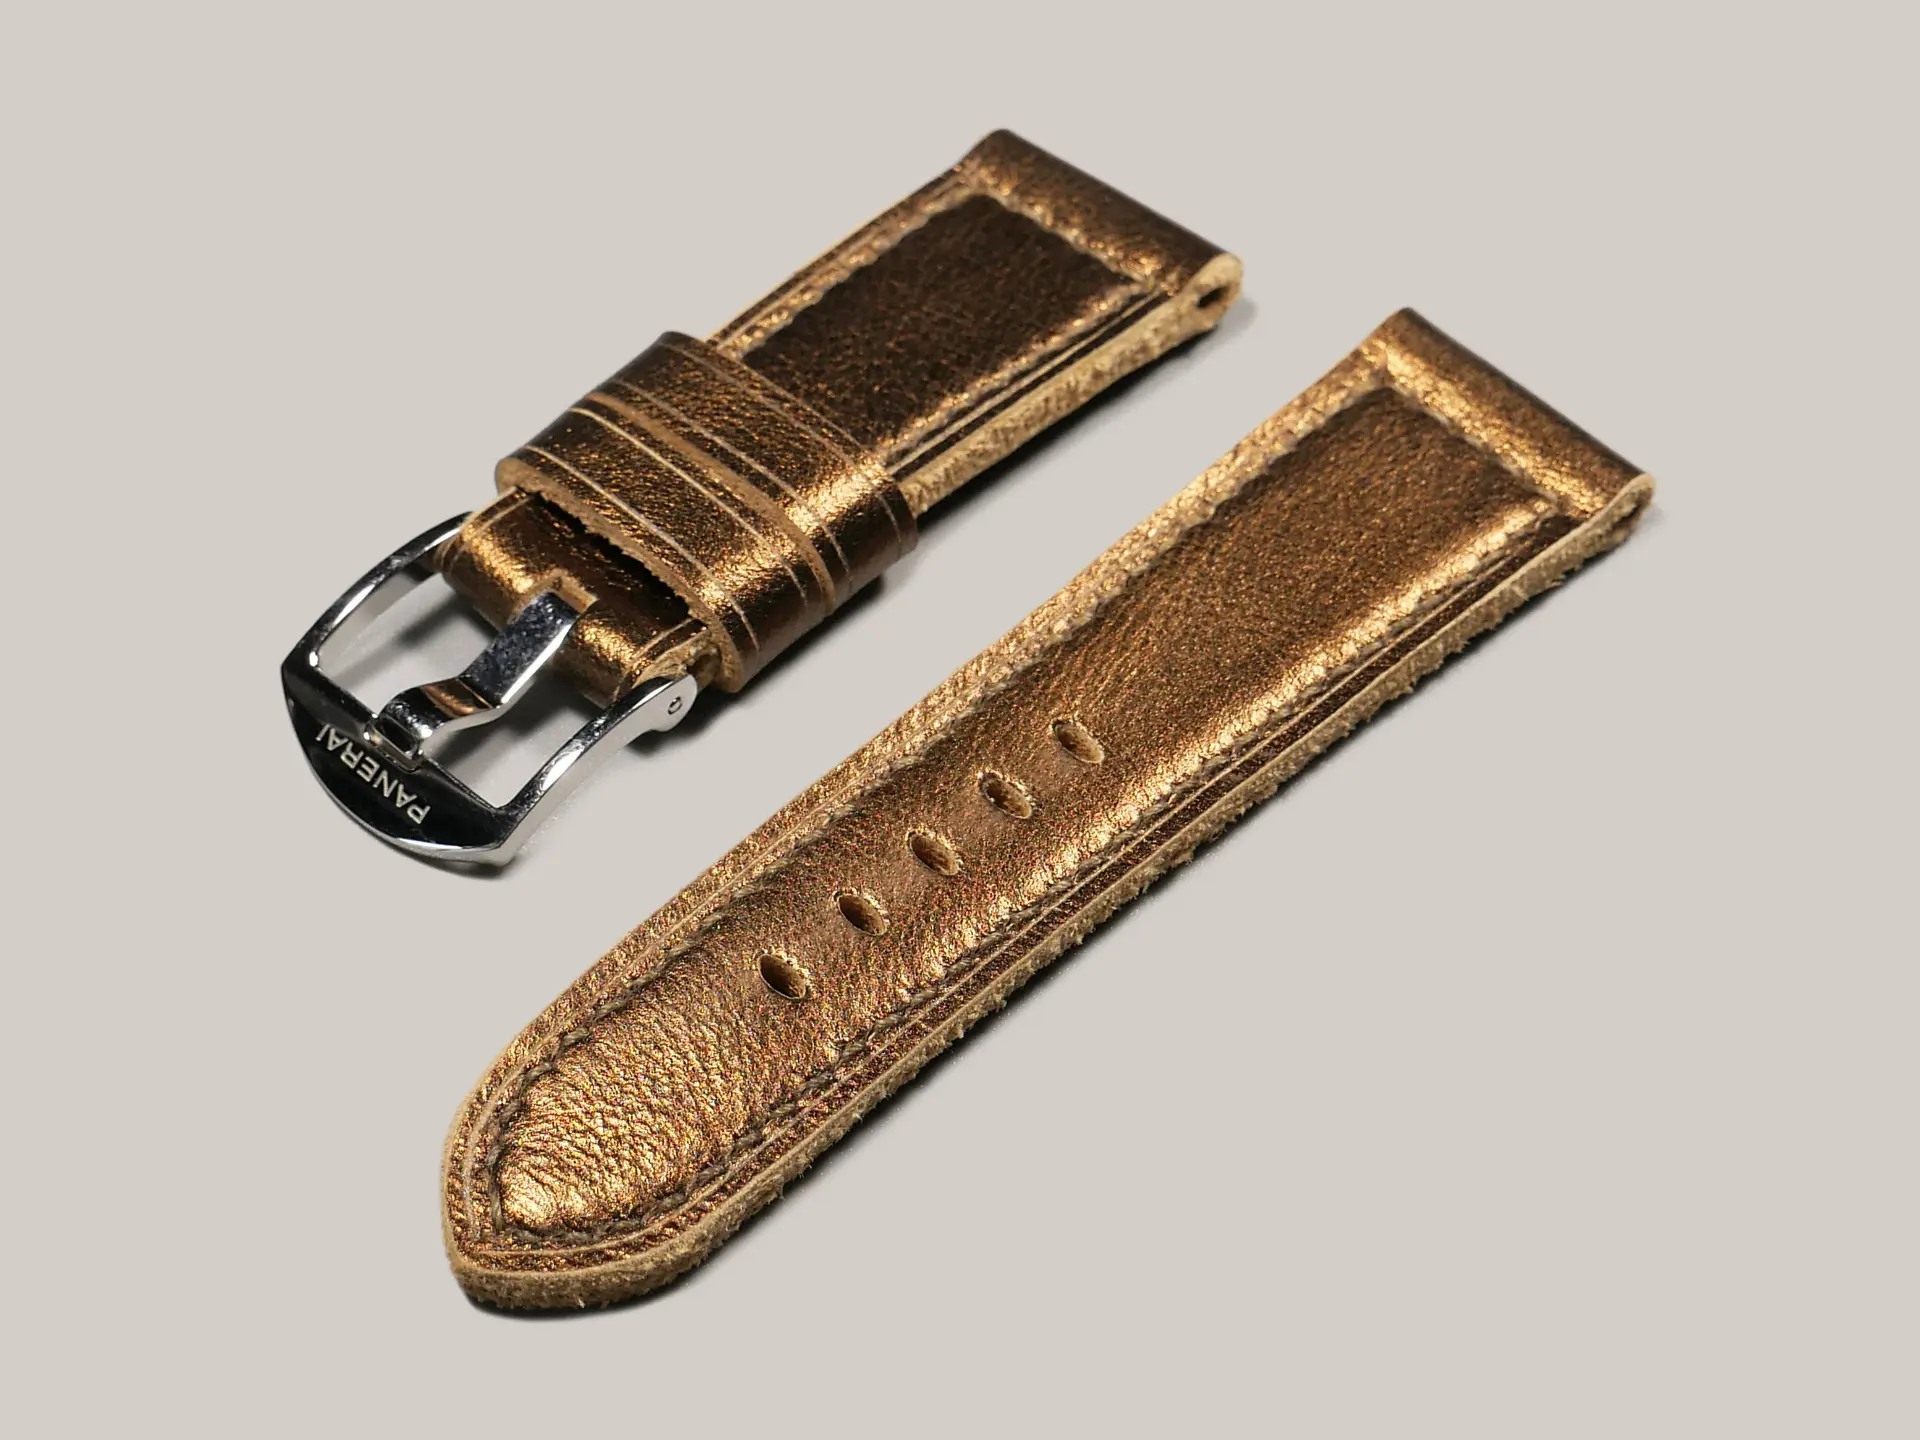 FS: Two 24mm straps for Panerai: Custom made Louis Vuitton & Micah